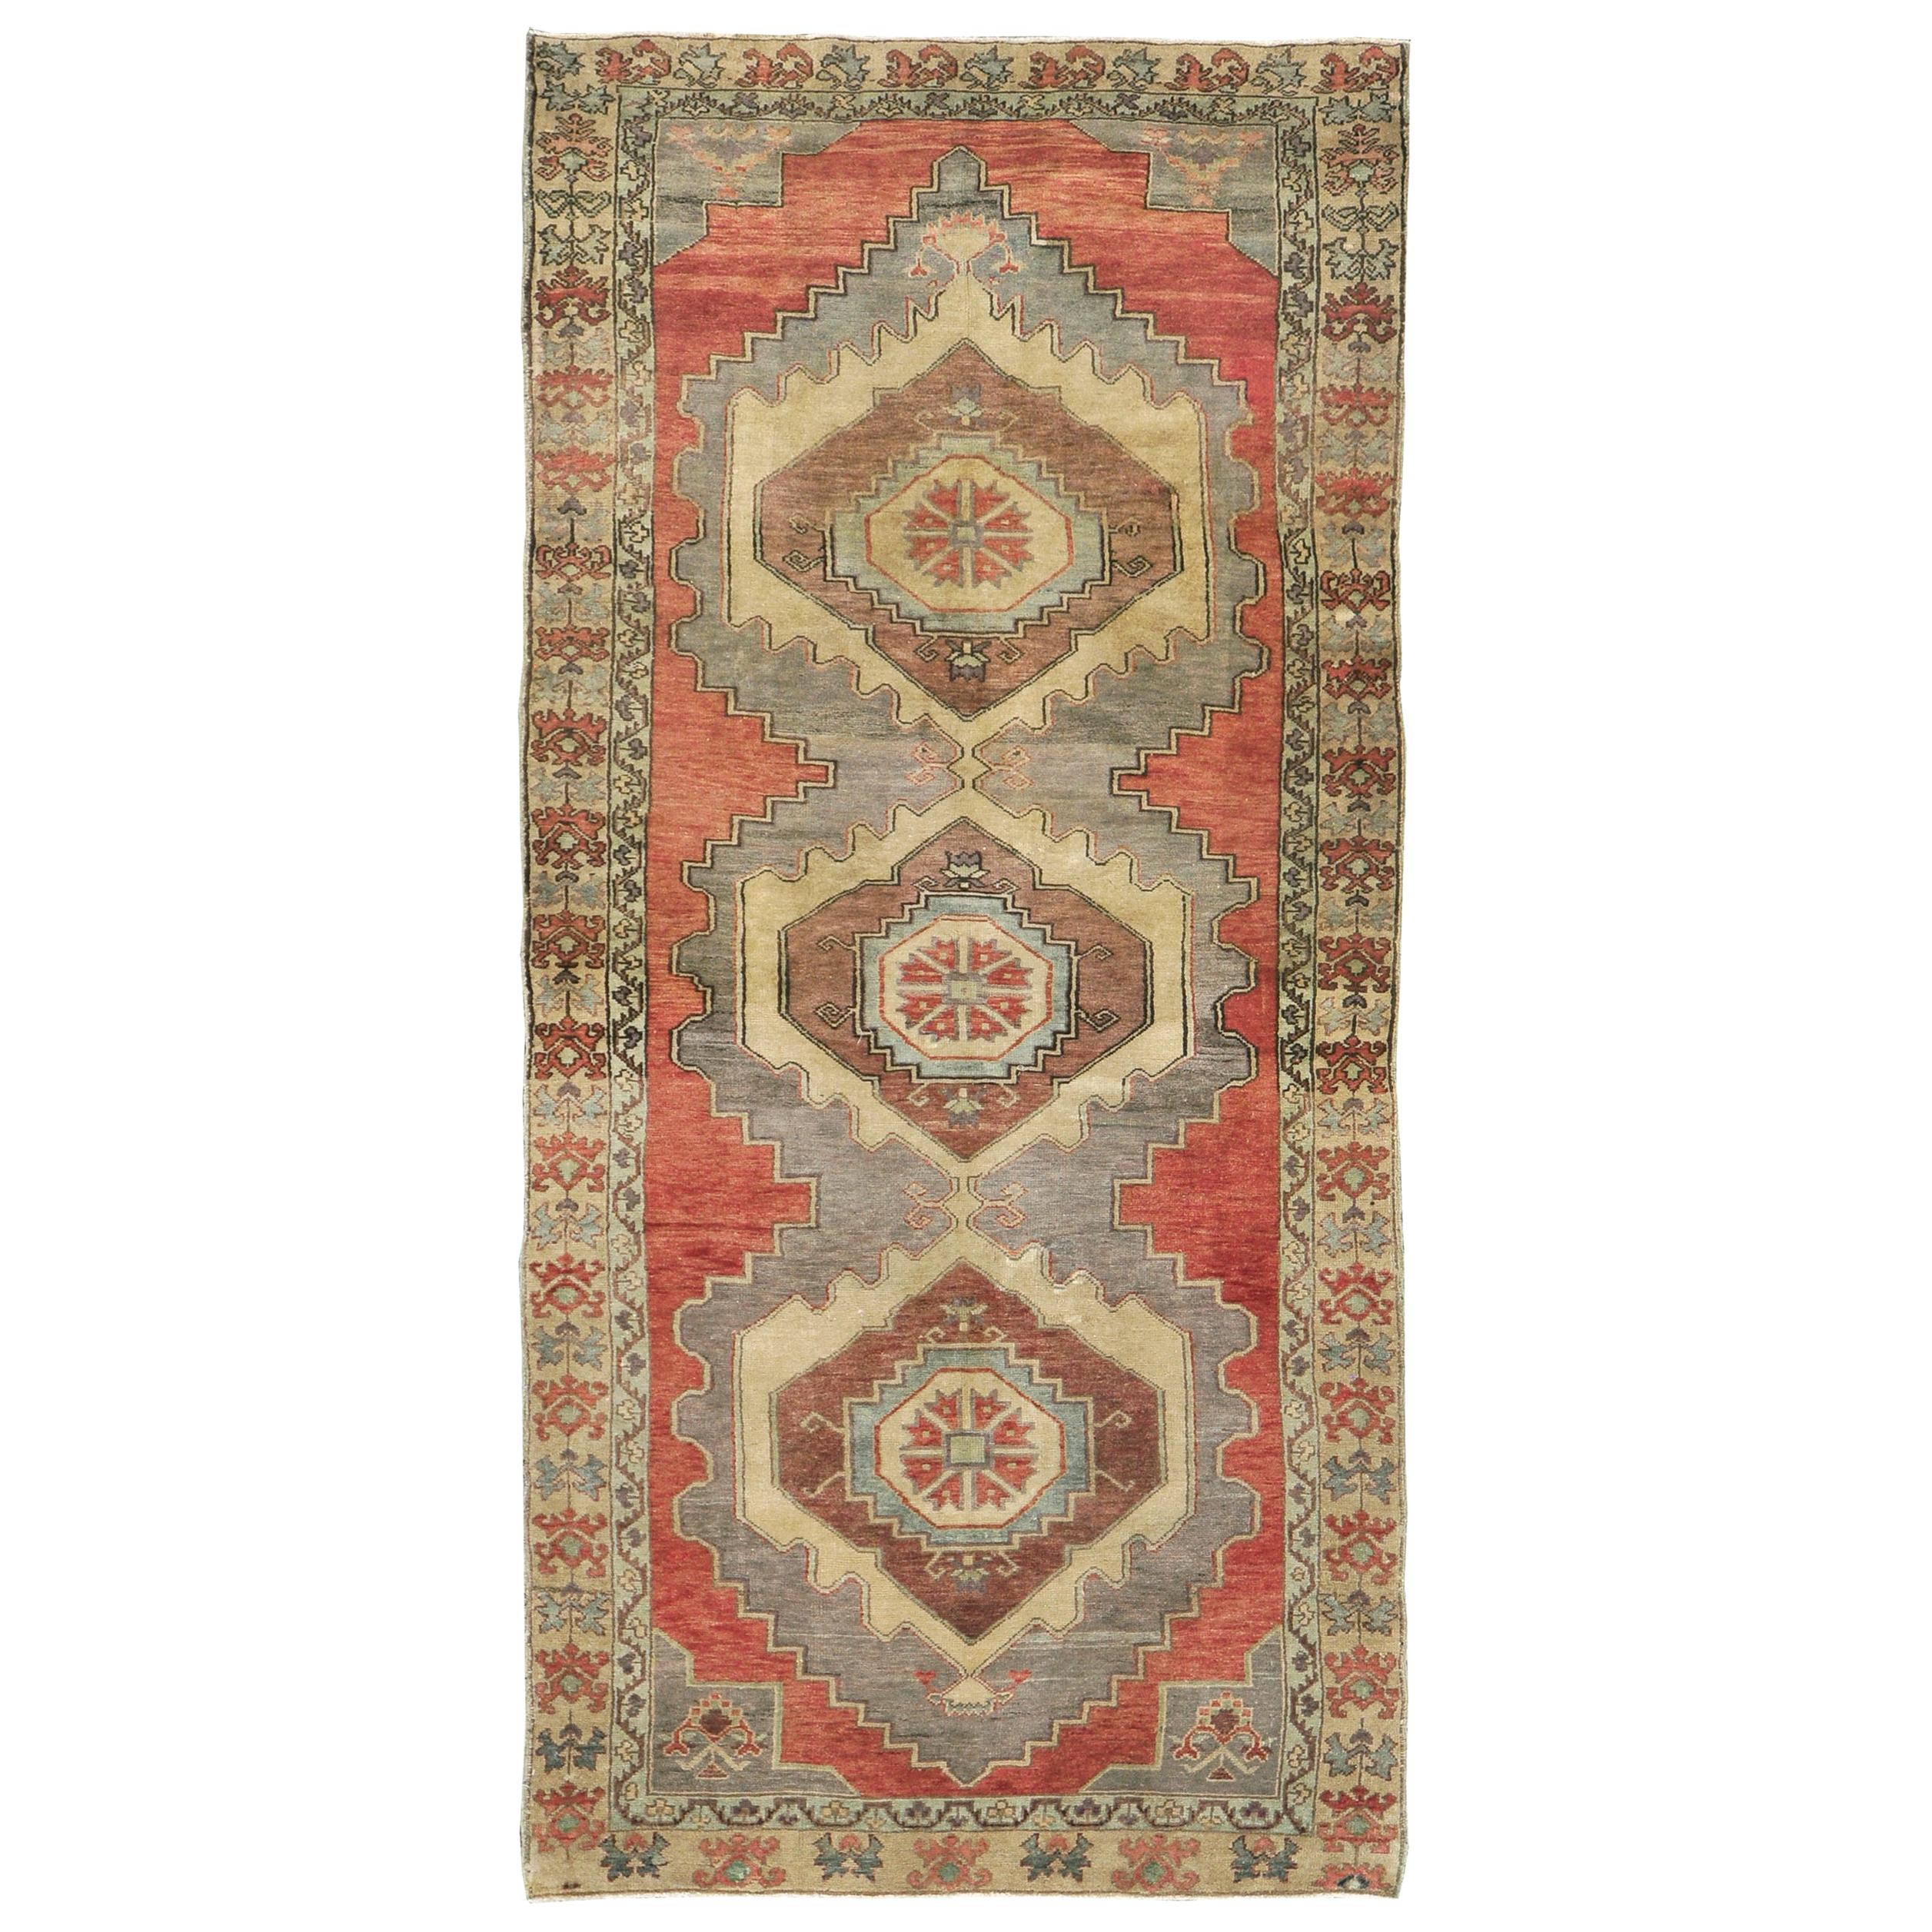 Vieux tapis turc d'Anatolie